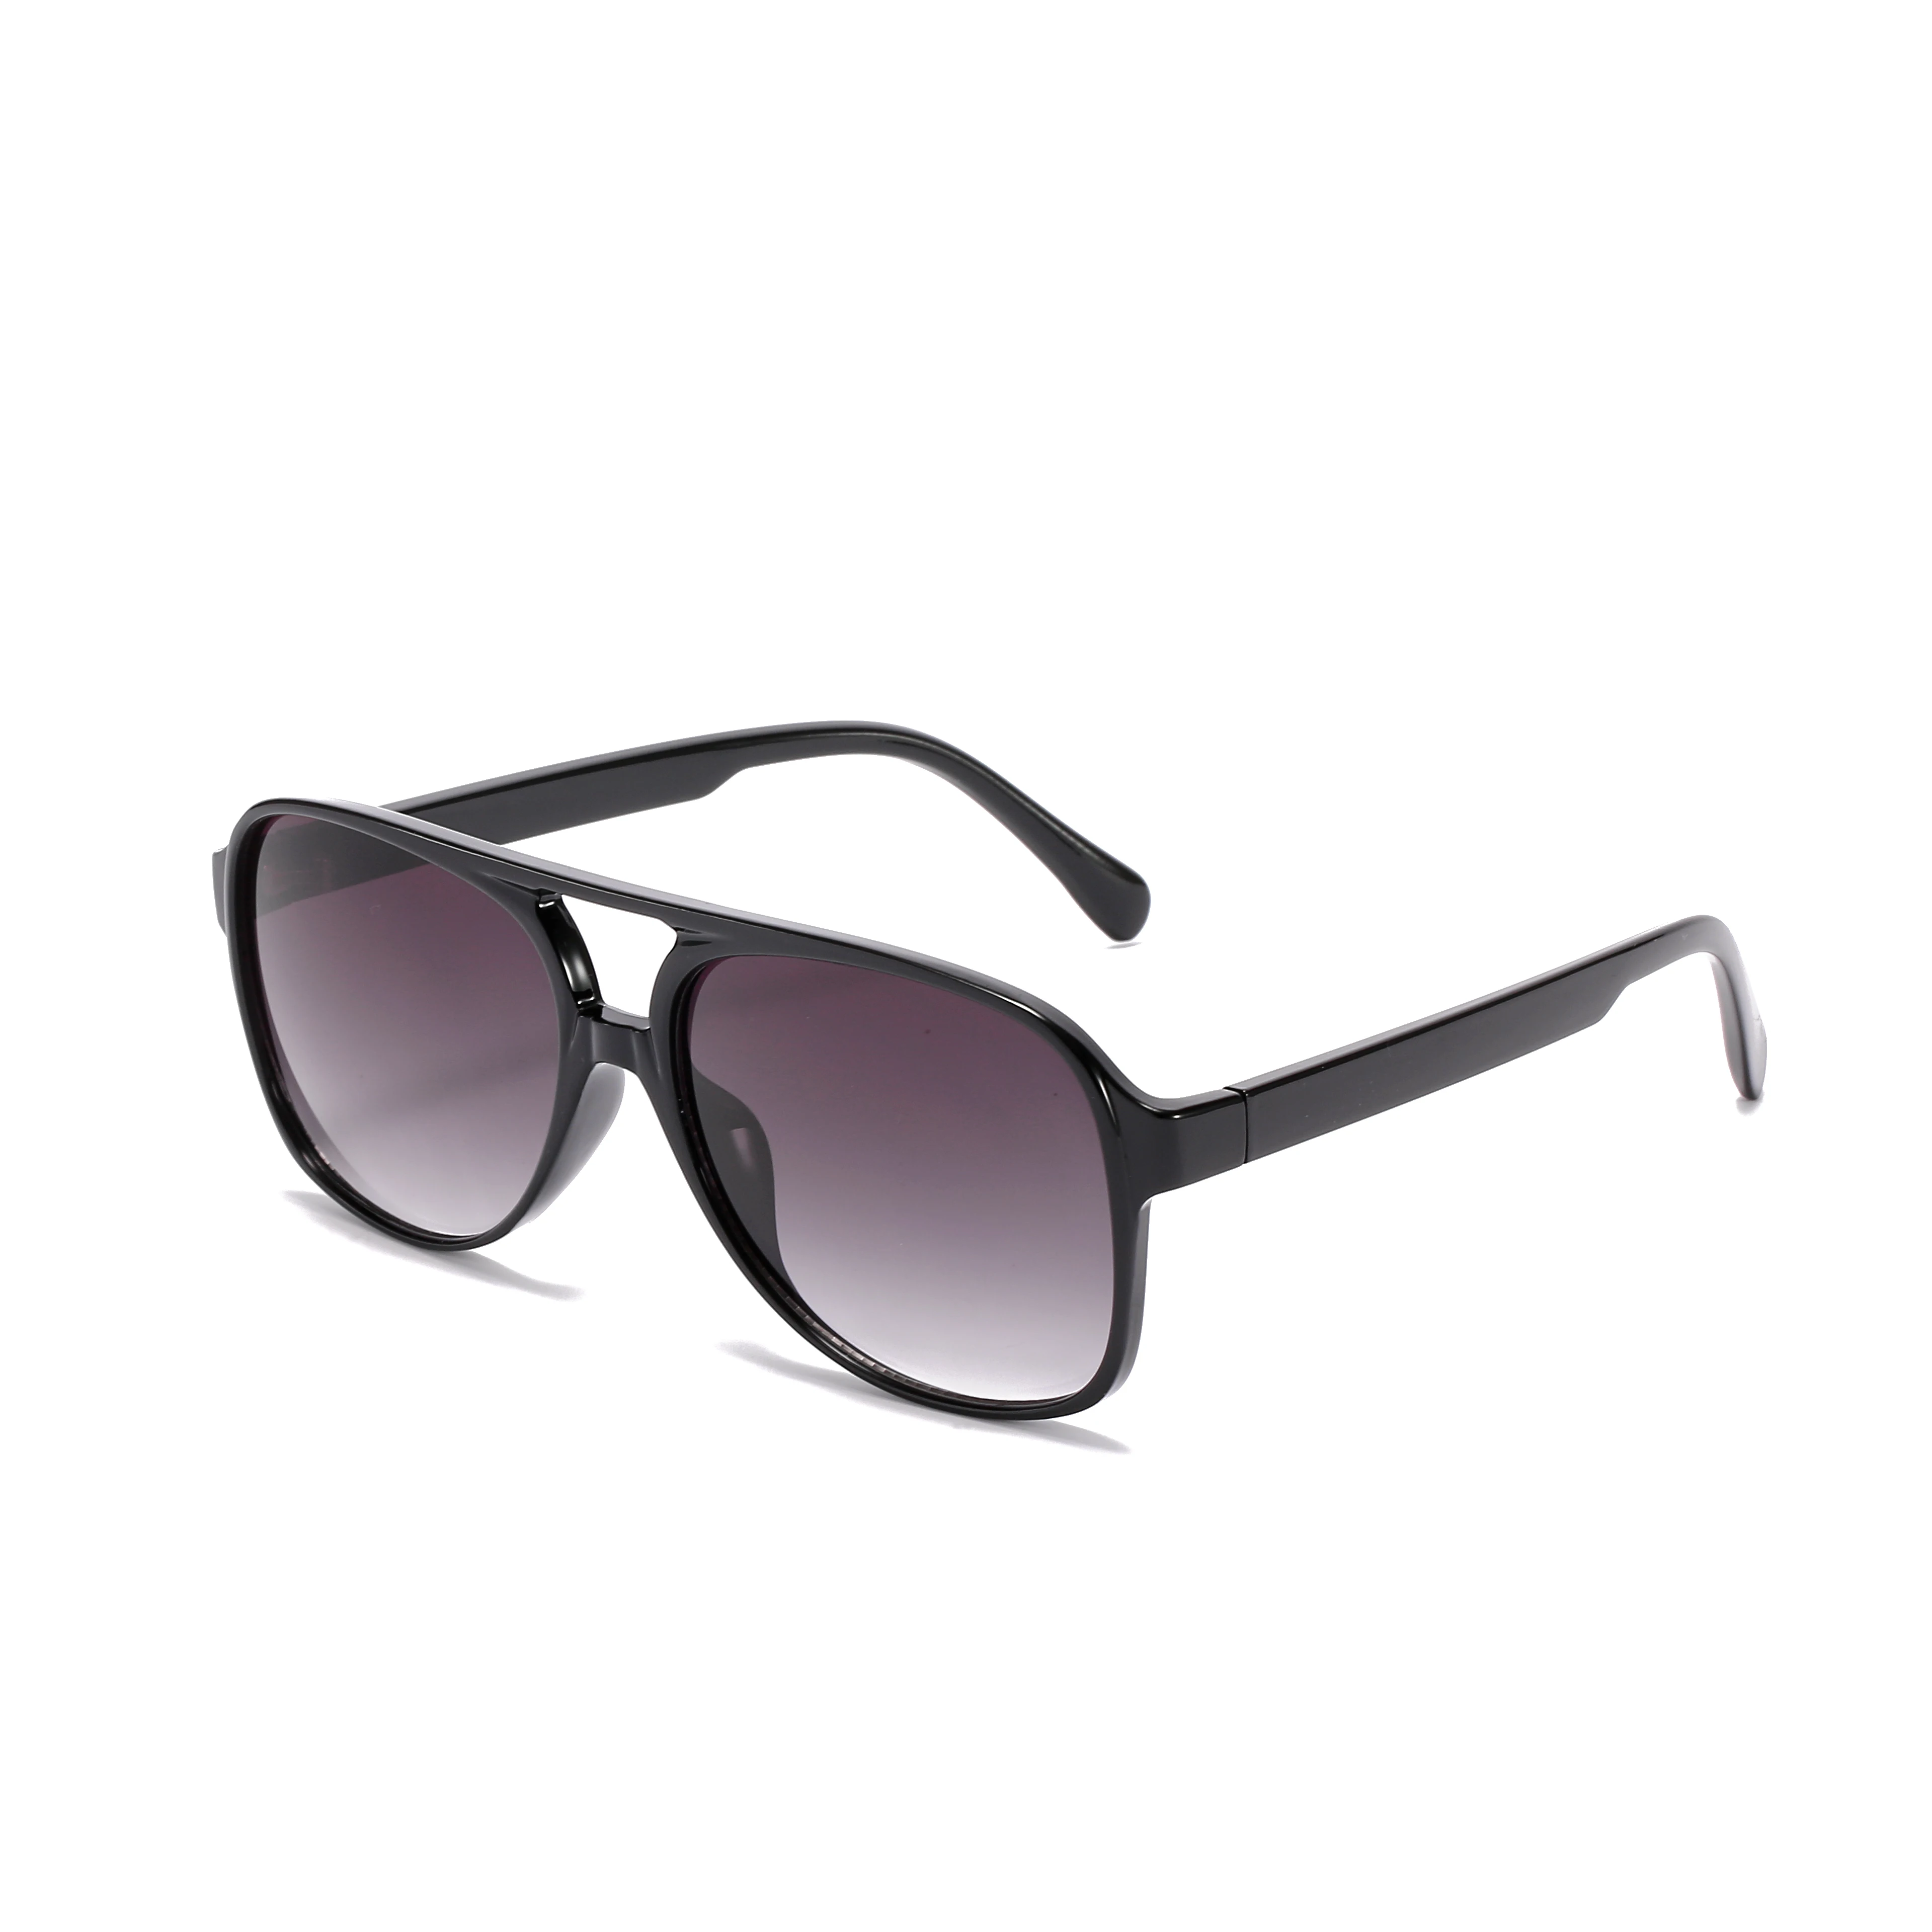 

Amazon Hot Selling Classic Vintage Sunglasses for Women Men Large Frame Retro Sunglasses Unique Aviation Shades Suglasses 2021, 5 colors